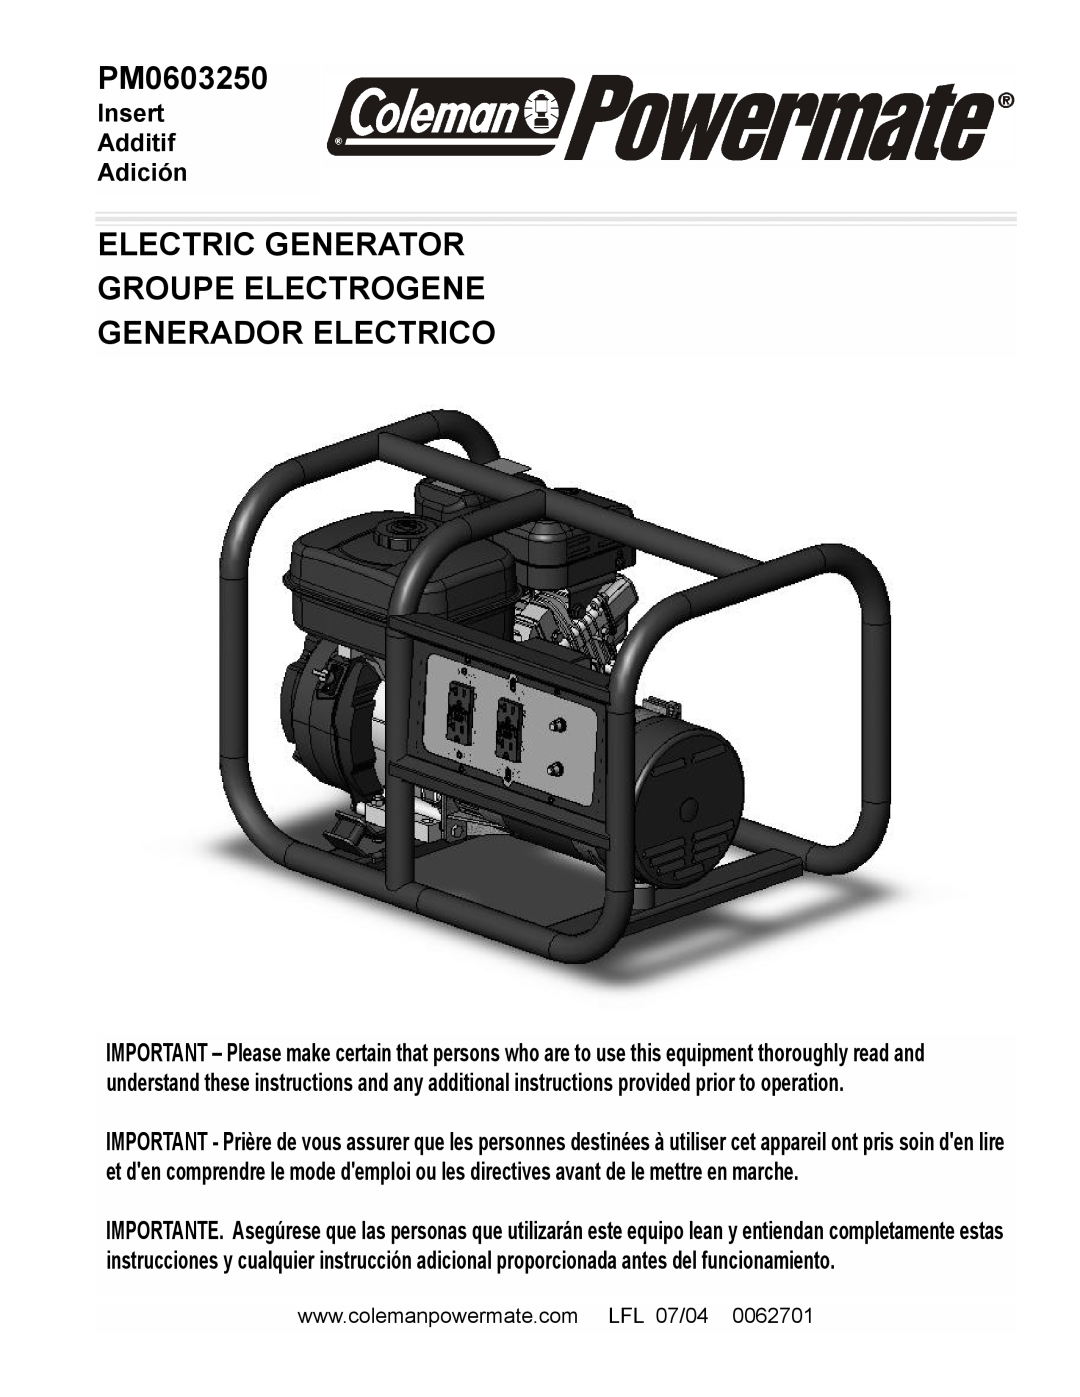 Powermate PM0603250 manual Electric Generator Groupe Electrogene, Generador Electrico, Insert Additif Adición 